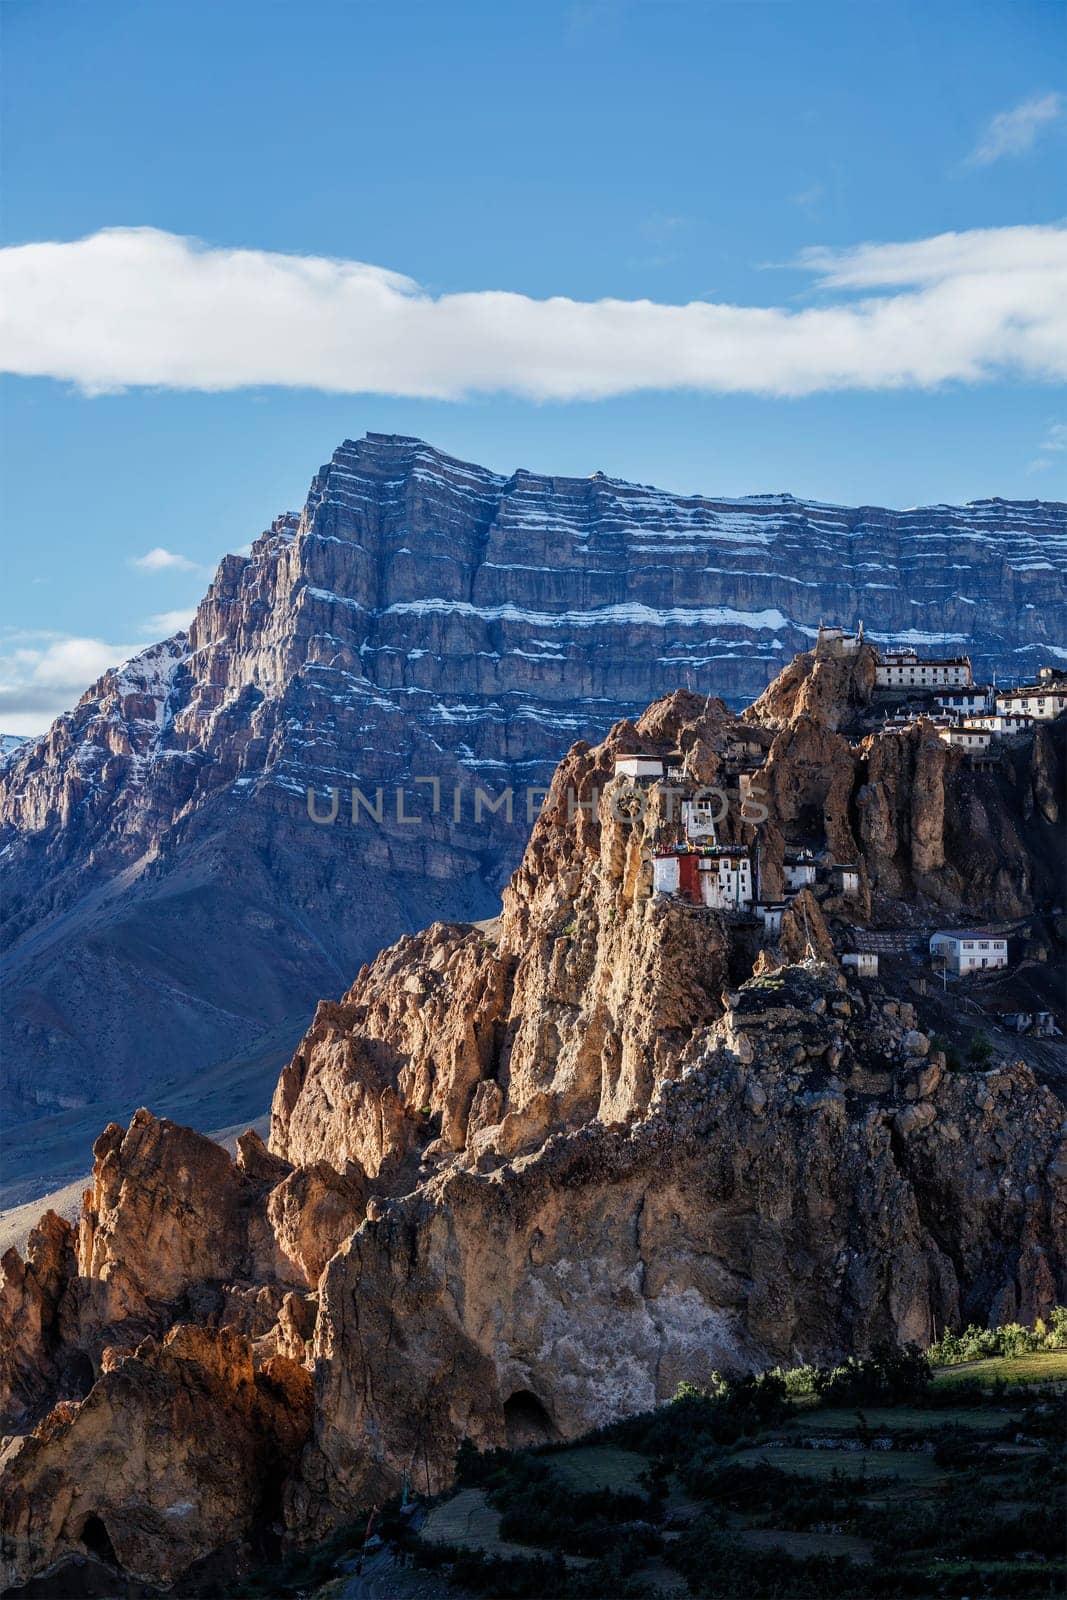 Dhankar monastry perched on a cliff in Himalayas. Dhankar, Spiti Valley, Himachal Pradesh, India